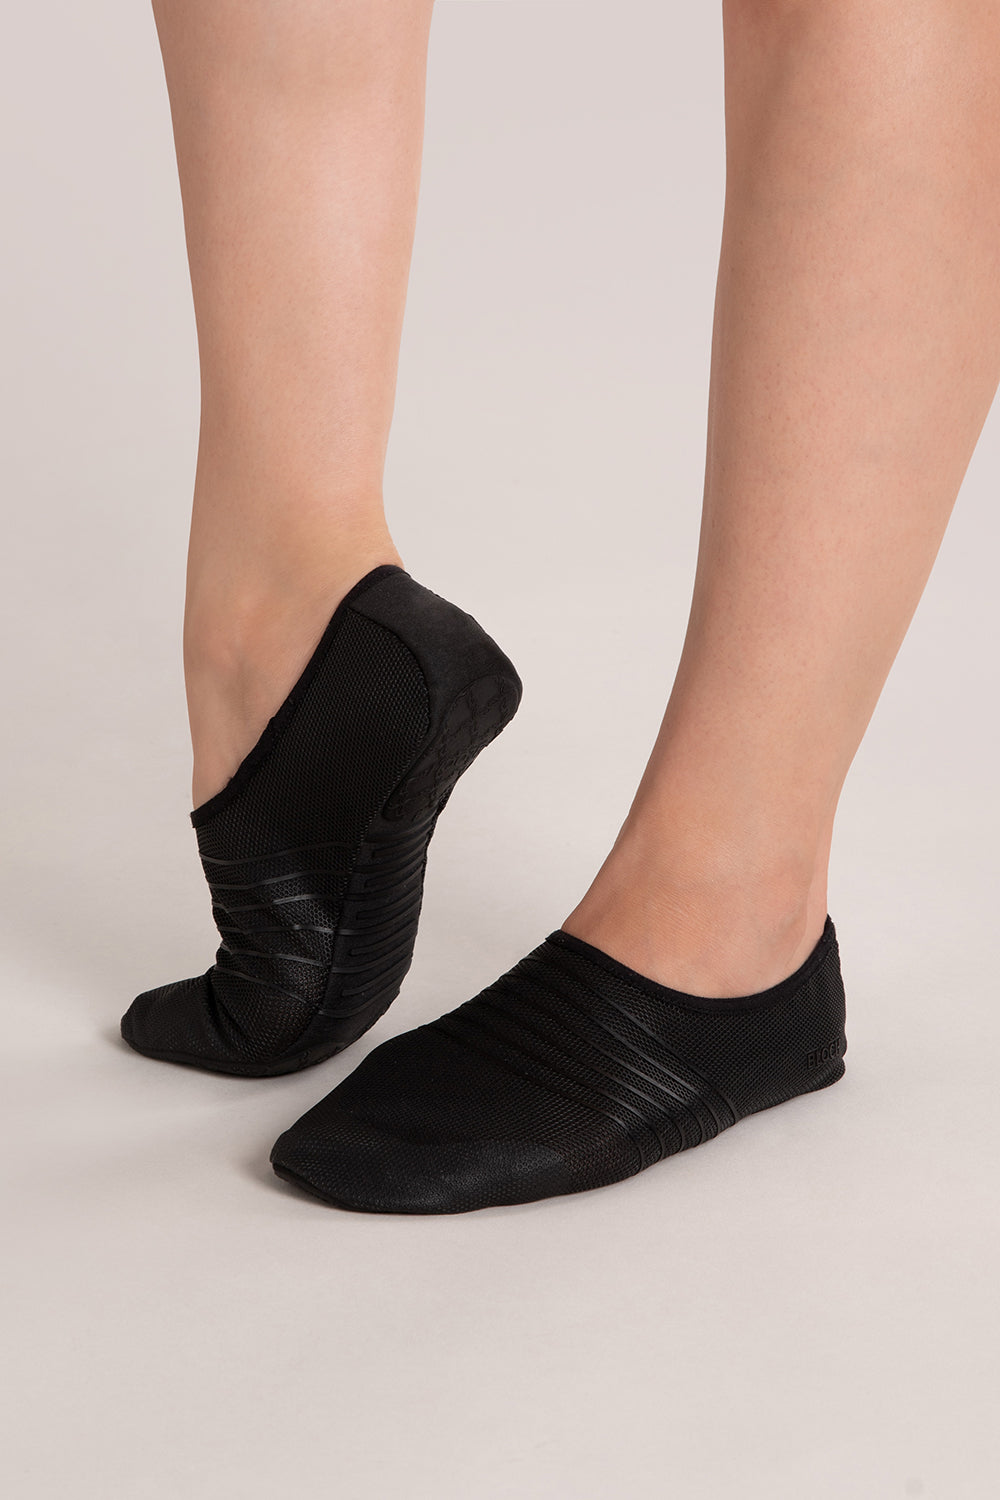 Flex Studio Shoes - Black, Yoga & Pilates Footwear